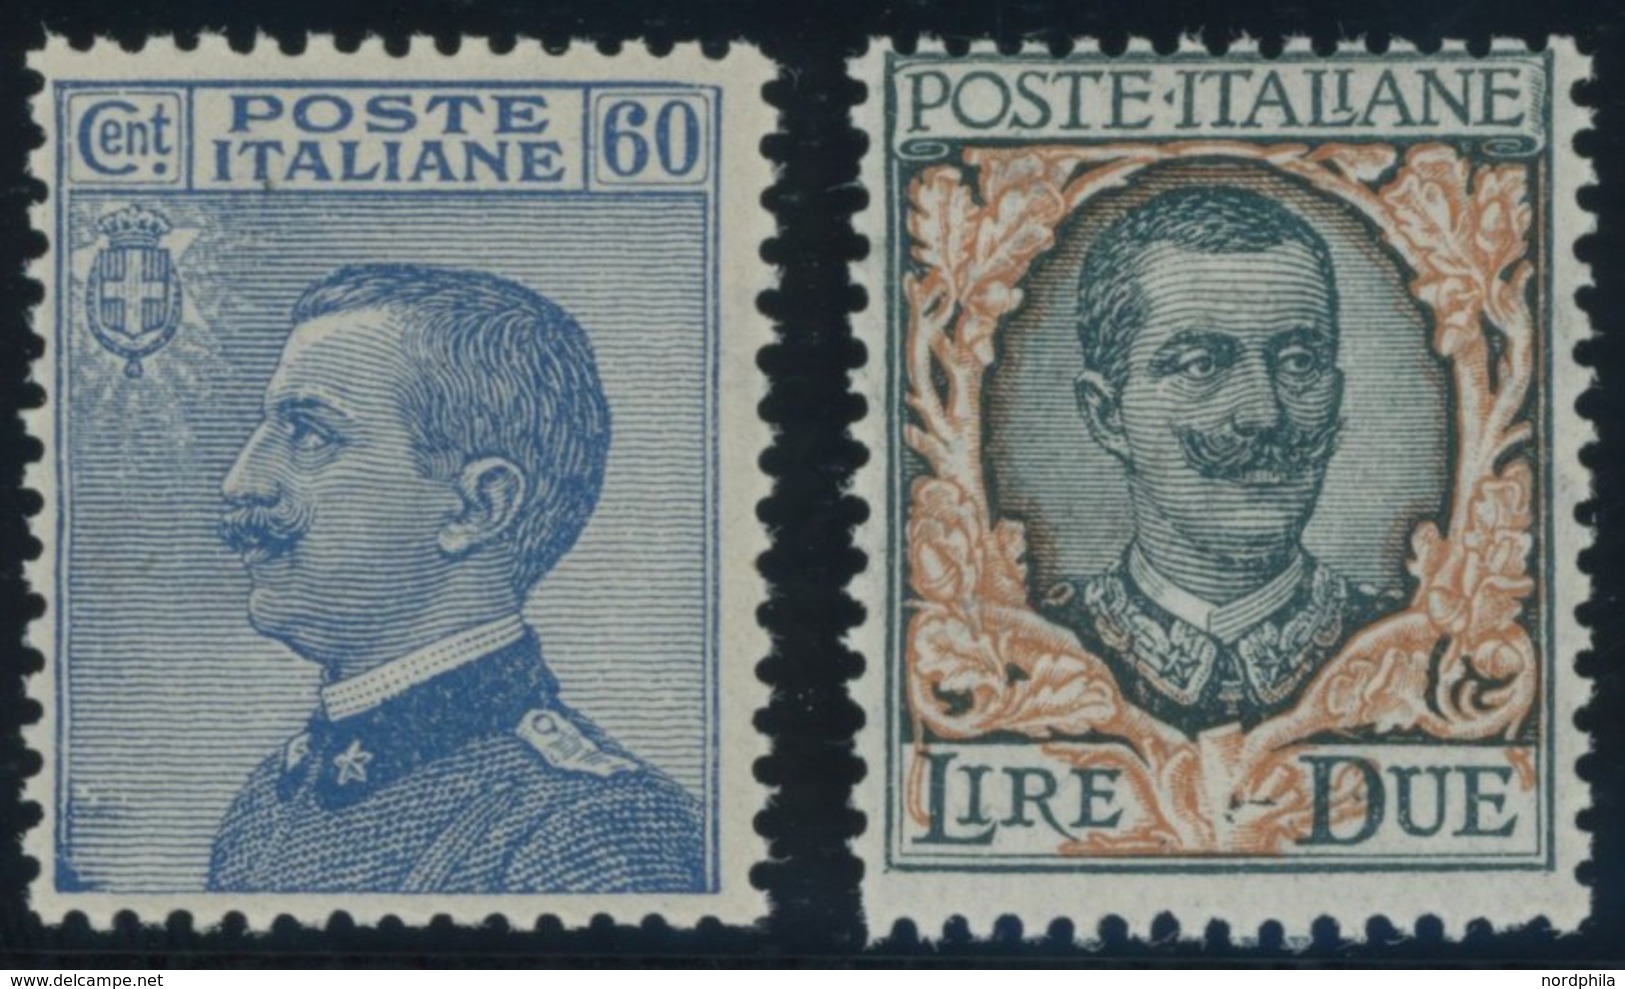 ITALIEN 186/7 **, 1923, König Viktor Emanuel III, Postfrisch, Pracht, Mi. 75.- - Unclassified